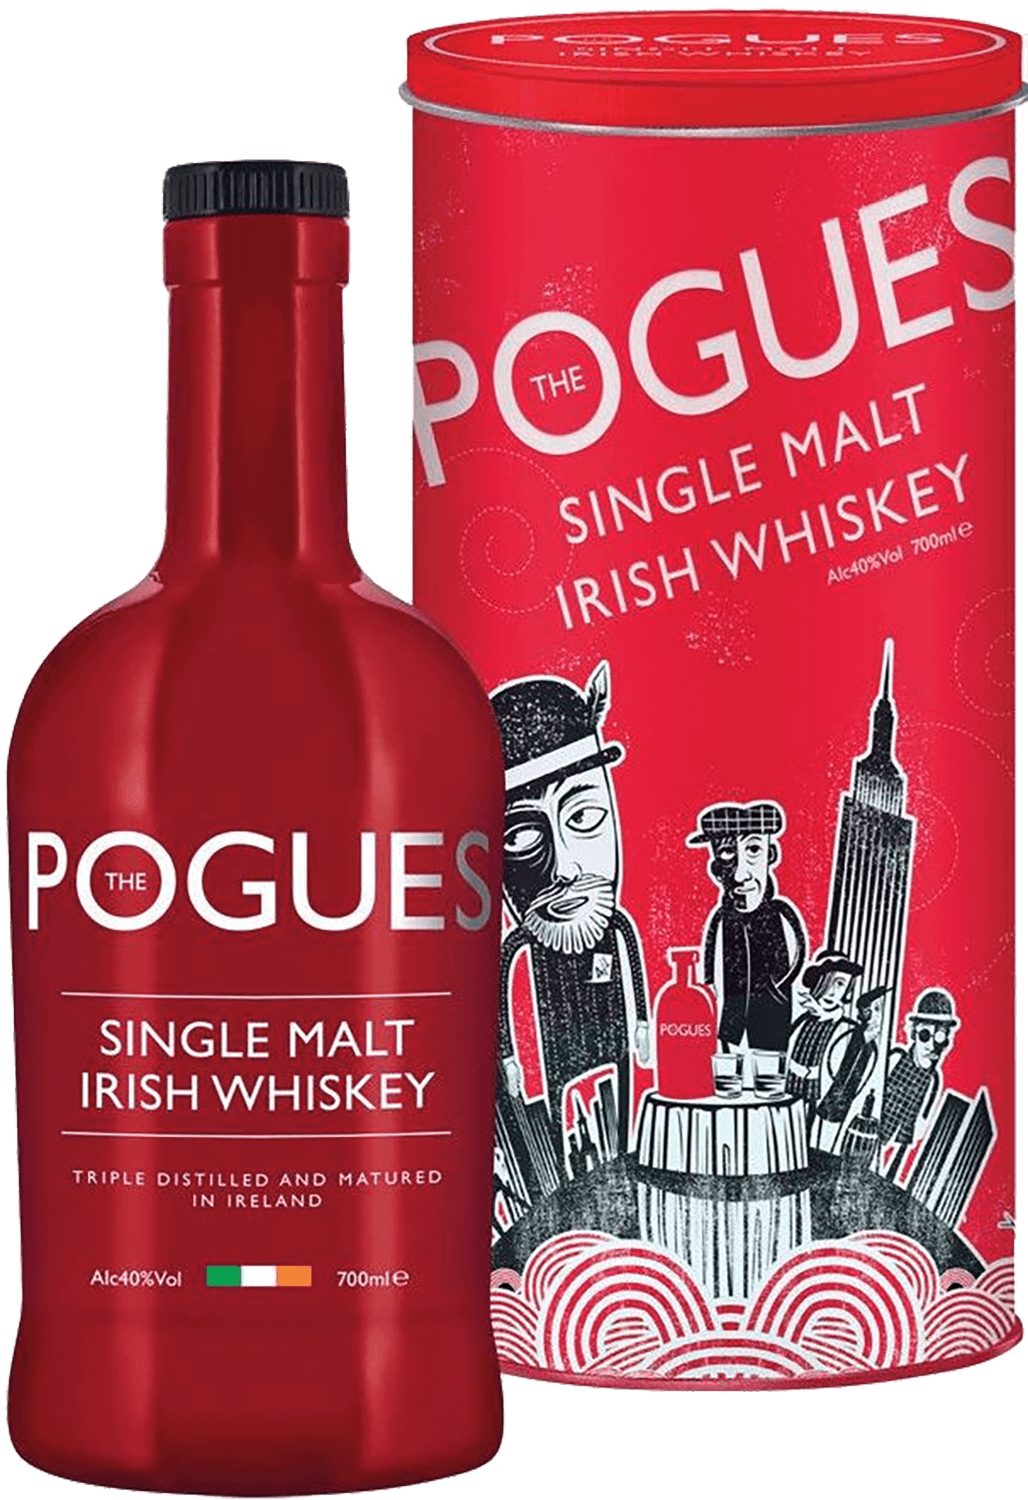 Pogues Single Malt Irish Whiskey (gift box) the sexton single malt irish whiskey